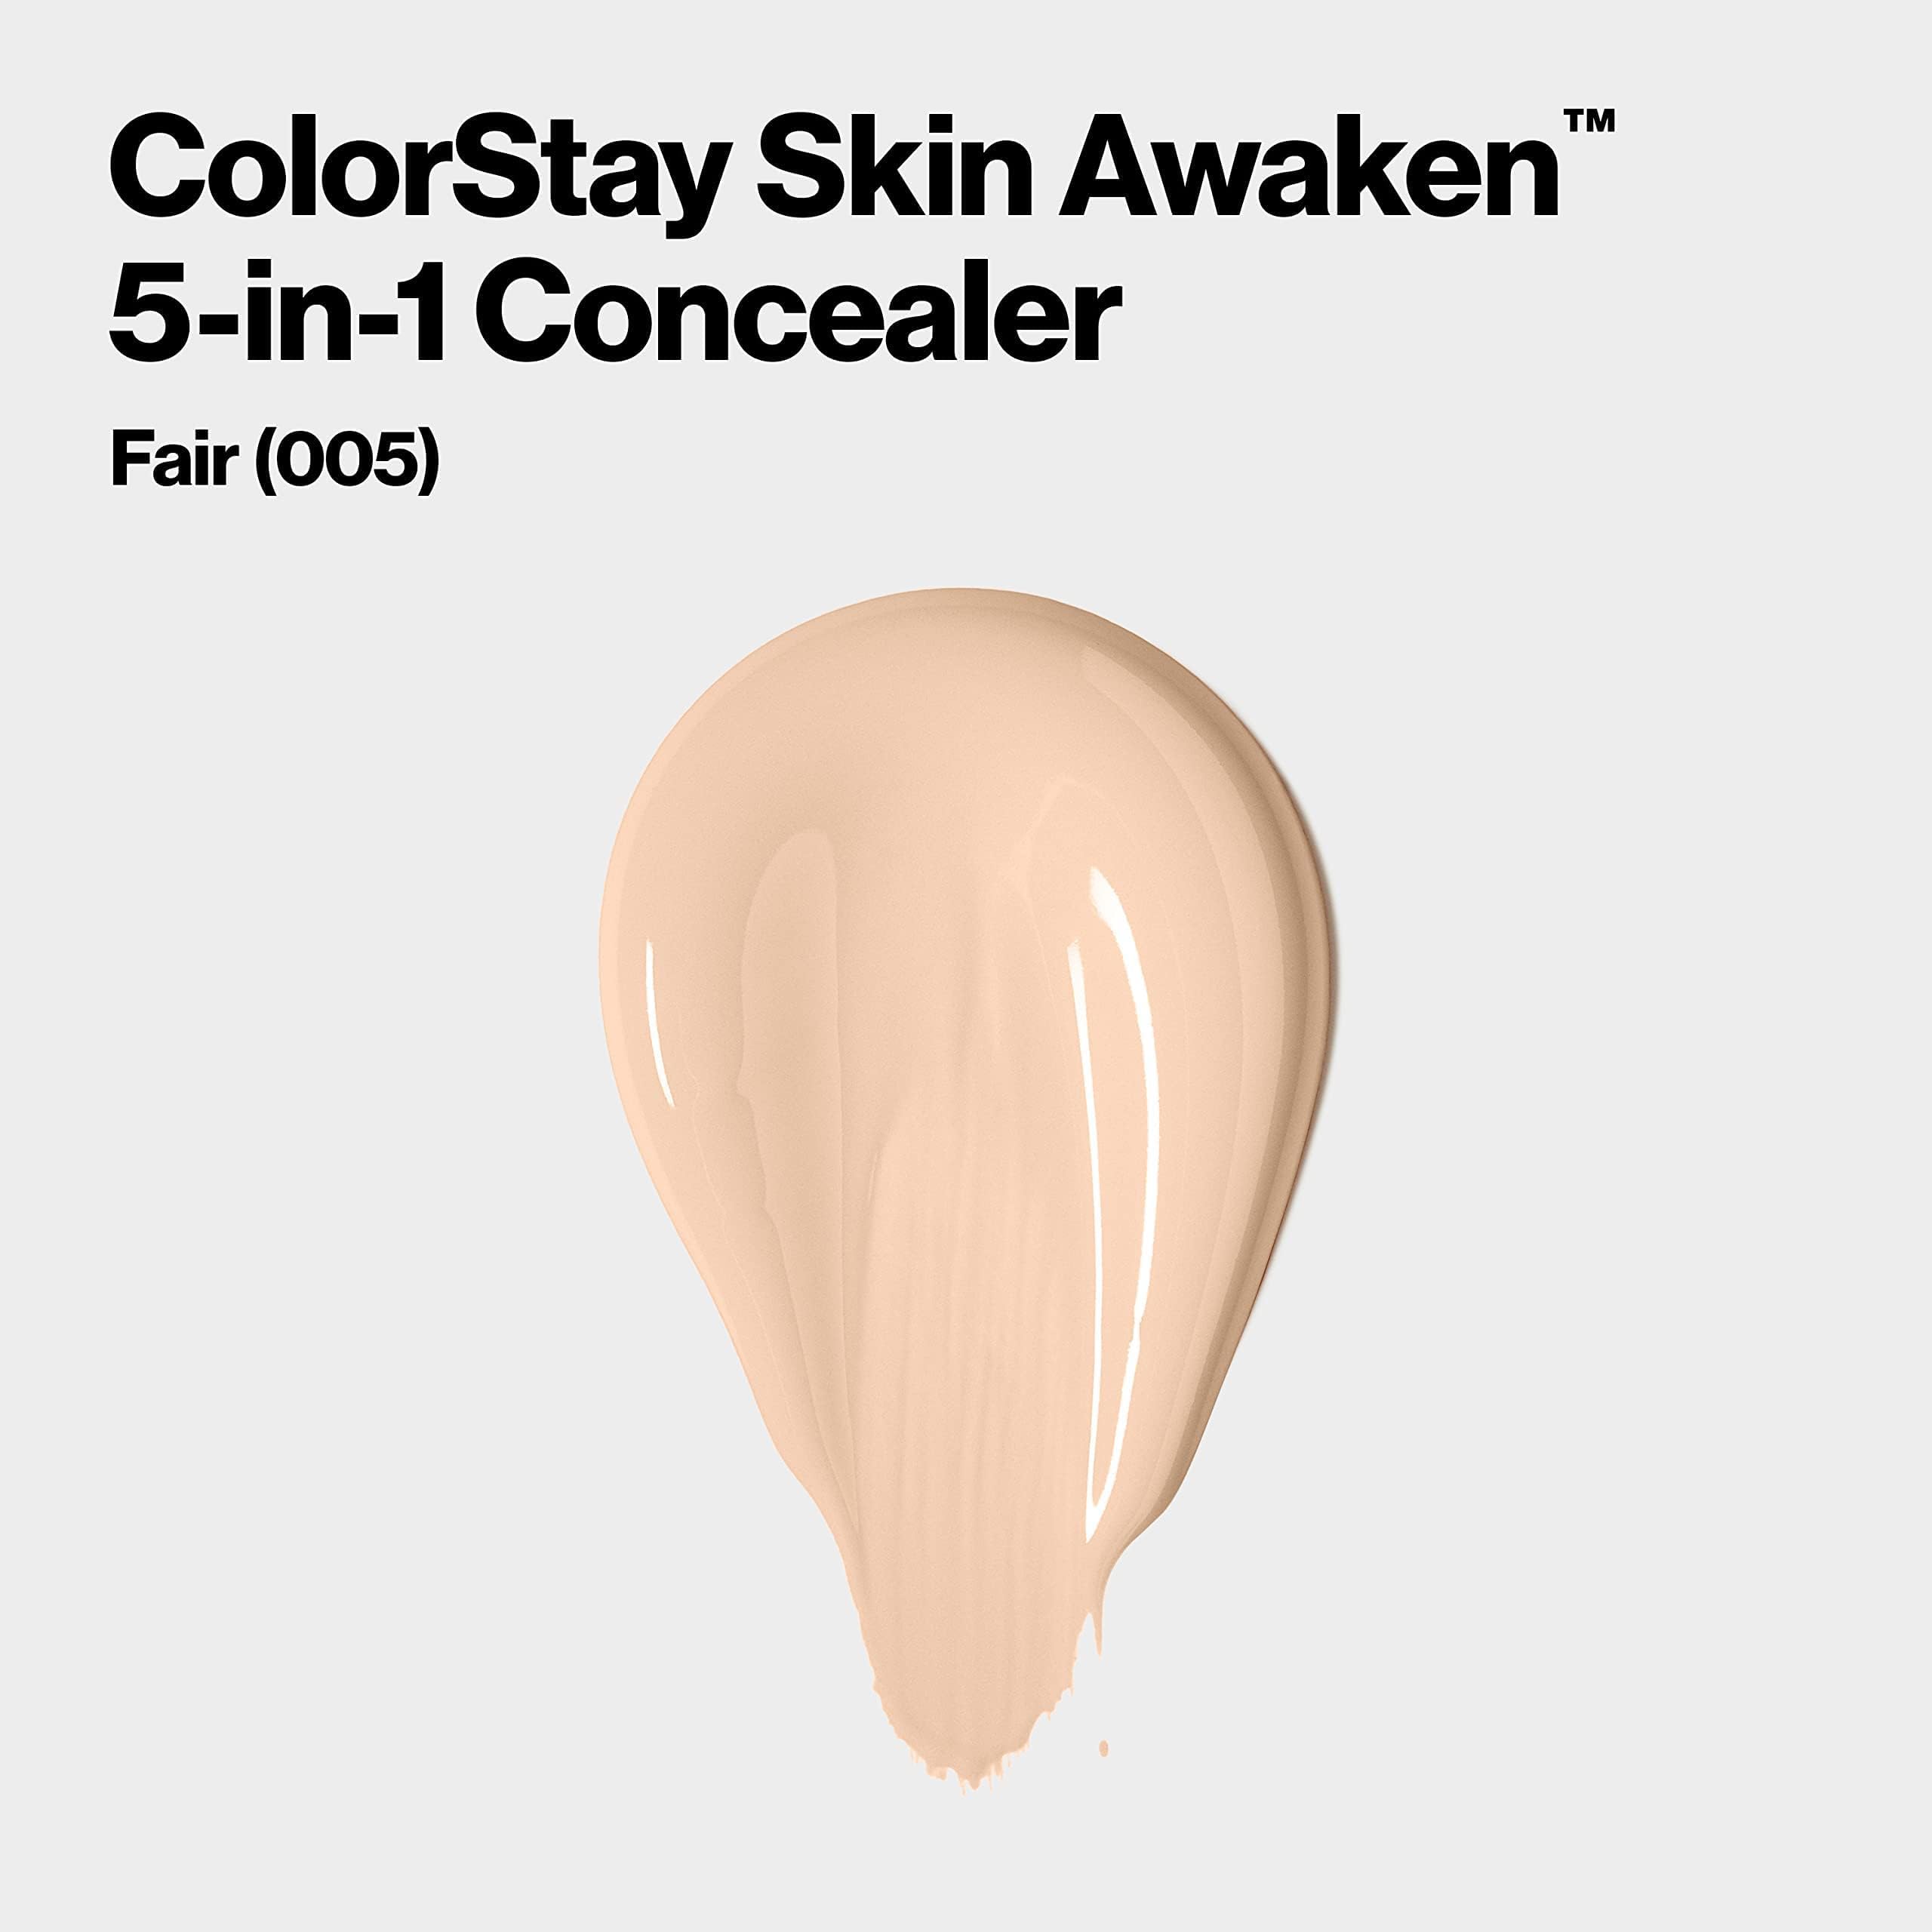 Revlon ColorStay Skin Awaken 5-in-1 Concealer, Lightweight, Creamy Longlasting Face Makeup with Caffeine & Vitamin C, For Imperfections, Dark Circles & Redness, 005 Fair, 0.27 fl oz